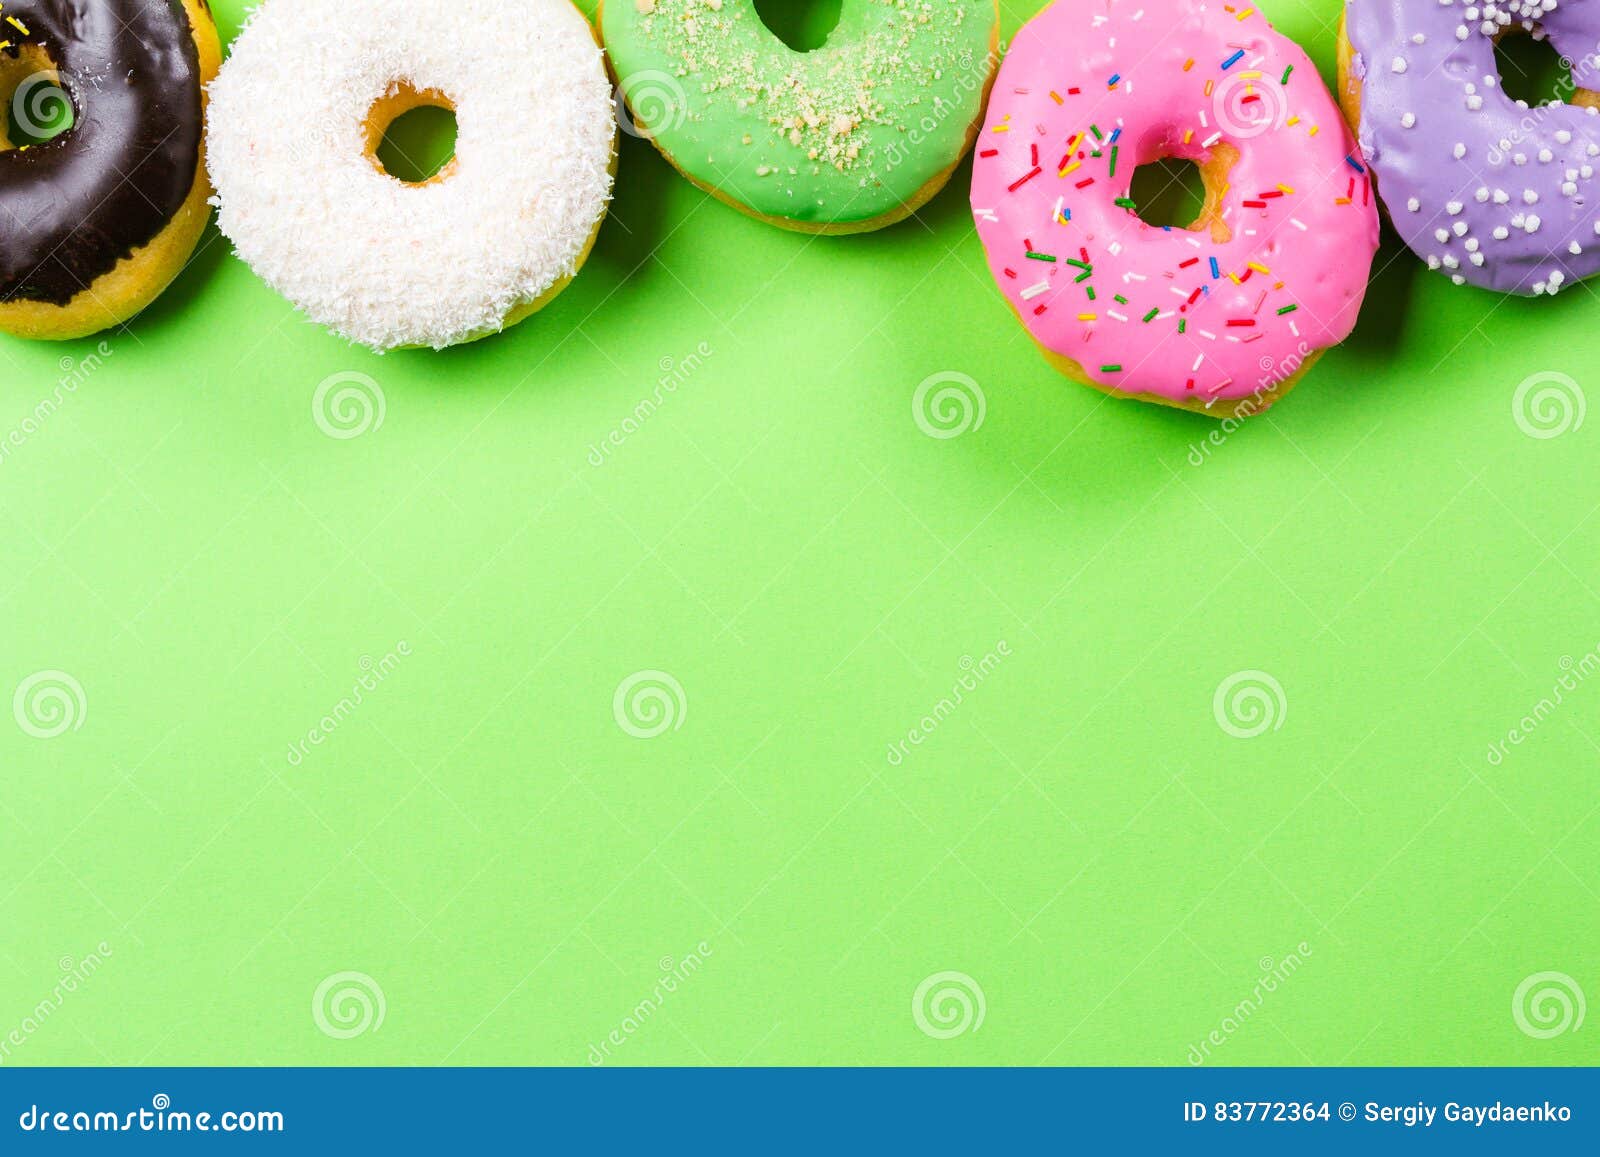 Food Doughnut HD Wallpaper